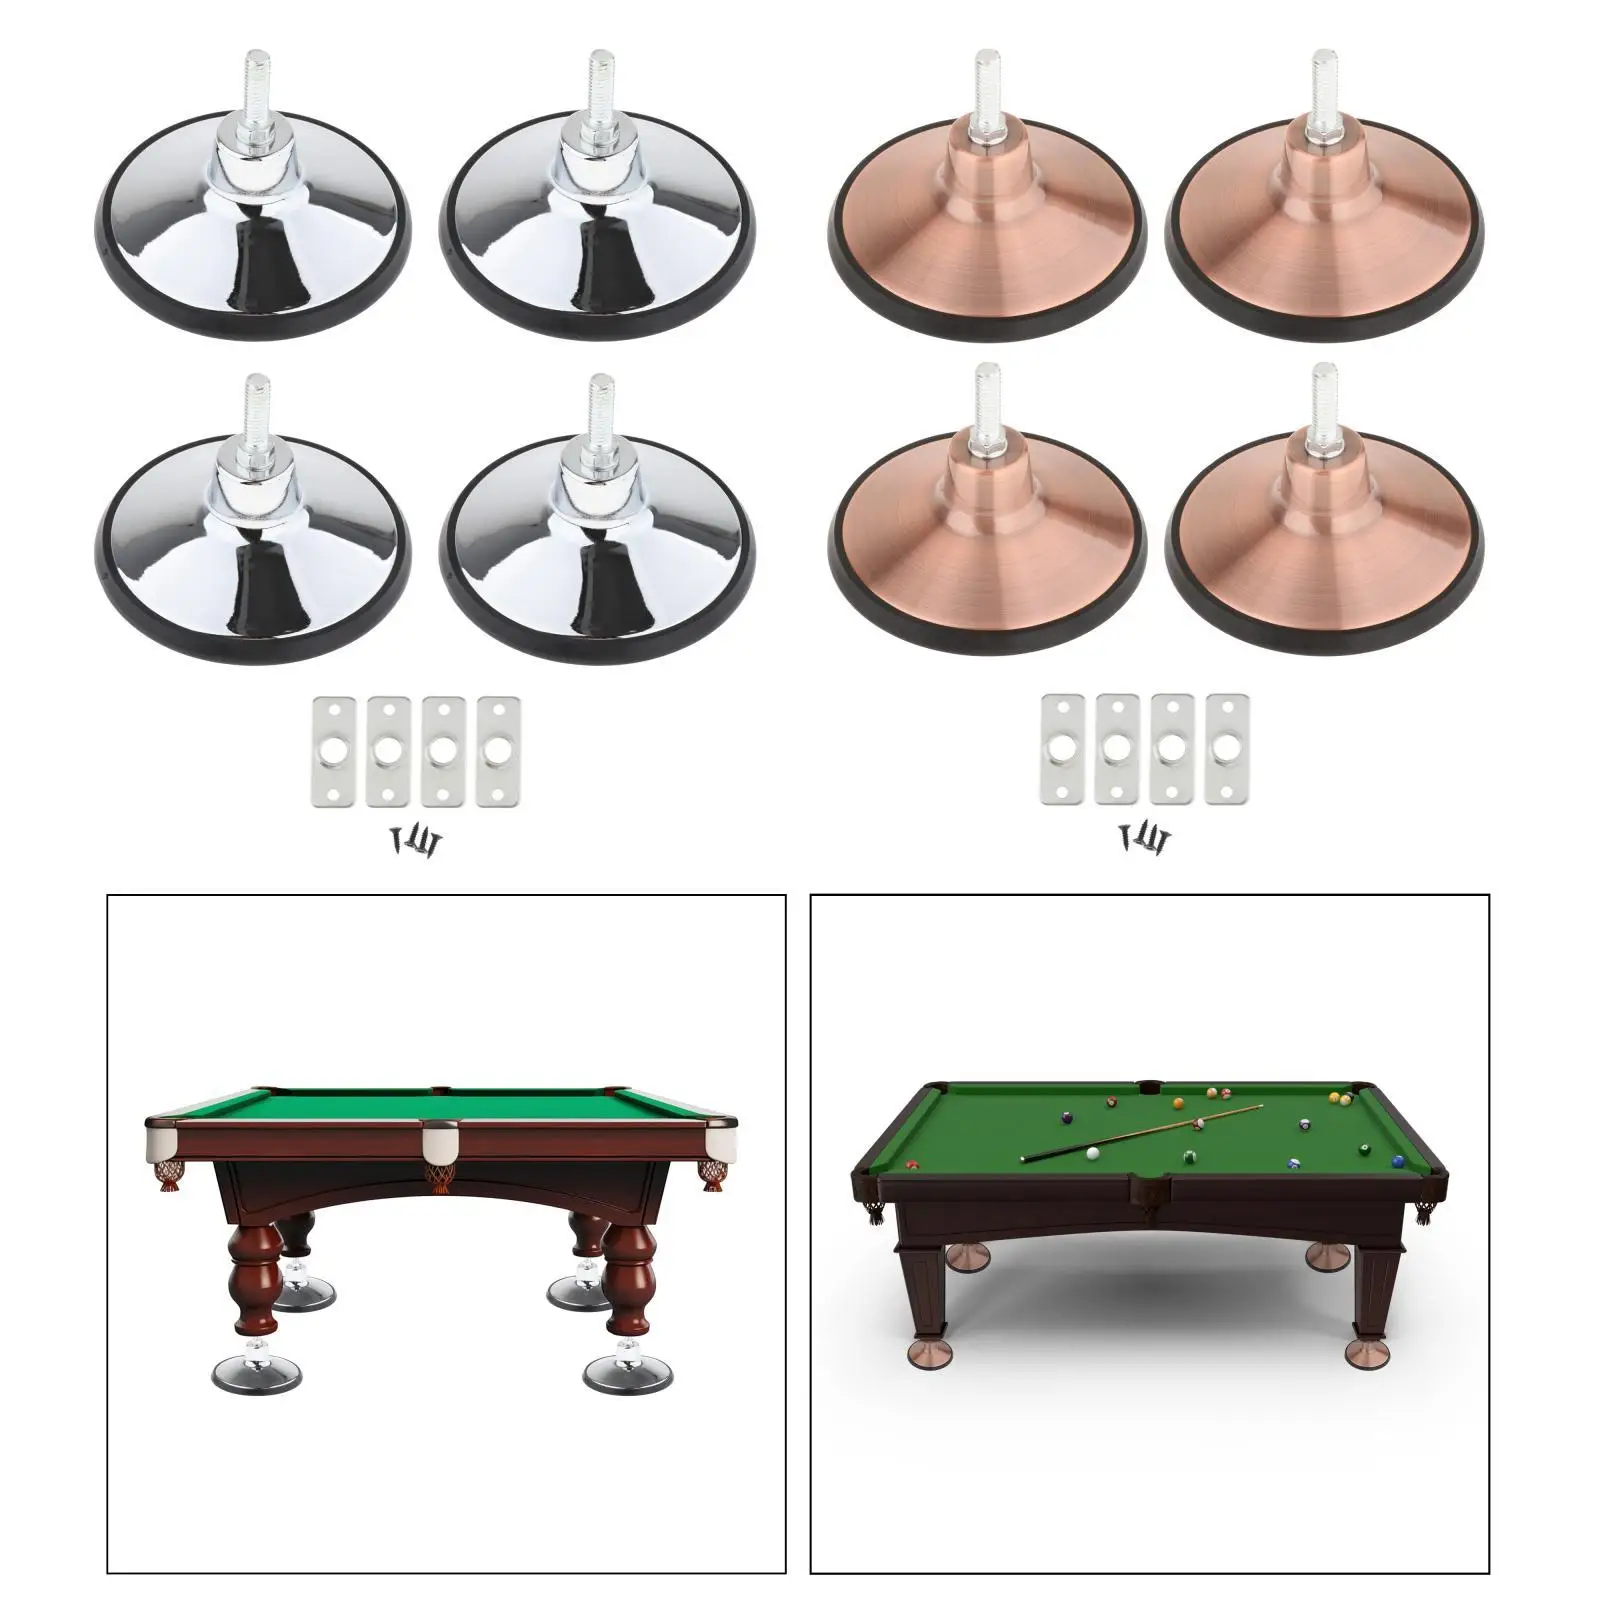 4x Billiard Pool Table Leg Levelers Hardware Stainless Steel, Game Table Leg